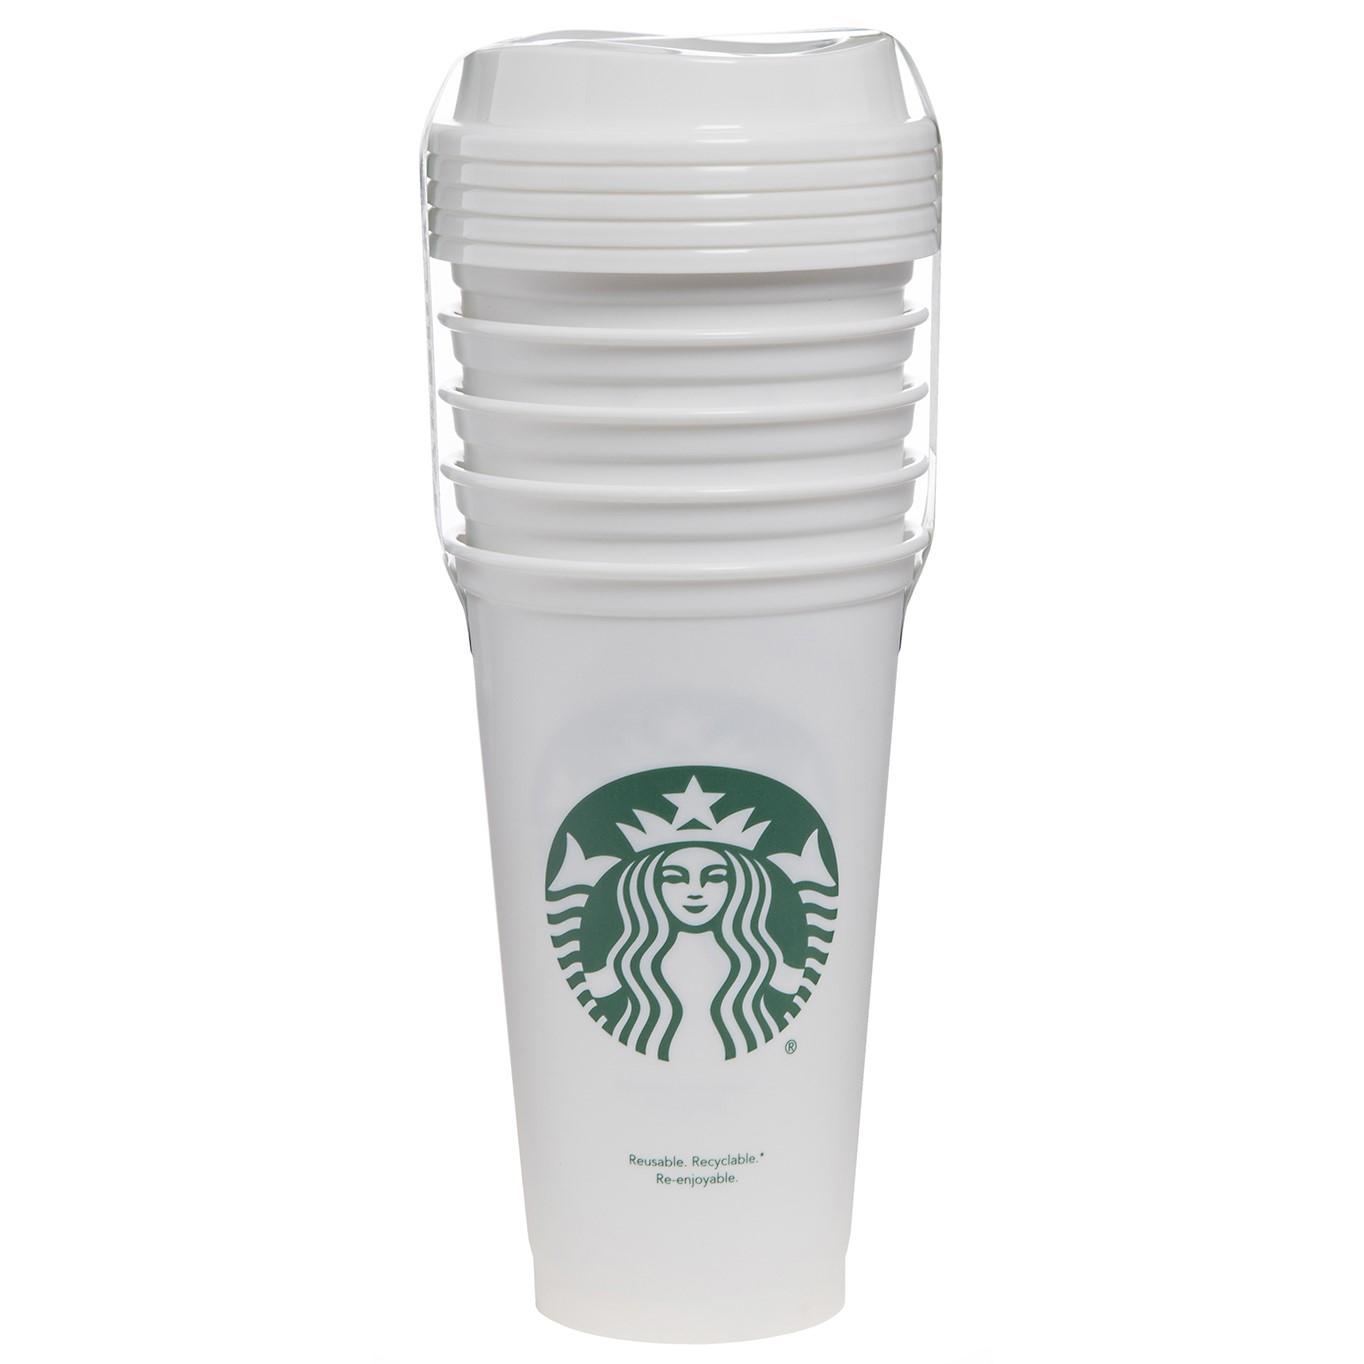 Starbucks 16oz Reusable Cups 5-Pack White - image 1 of 7